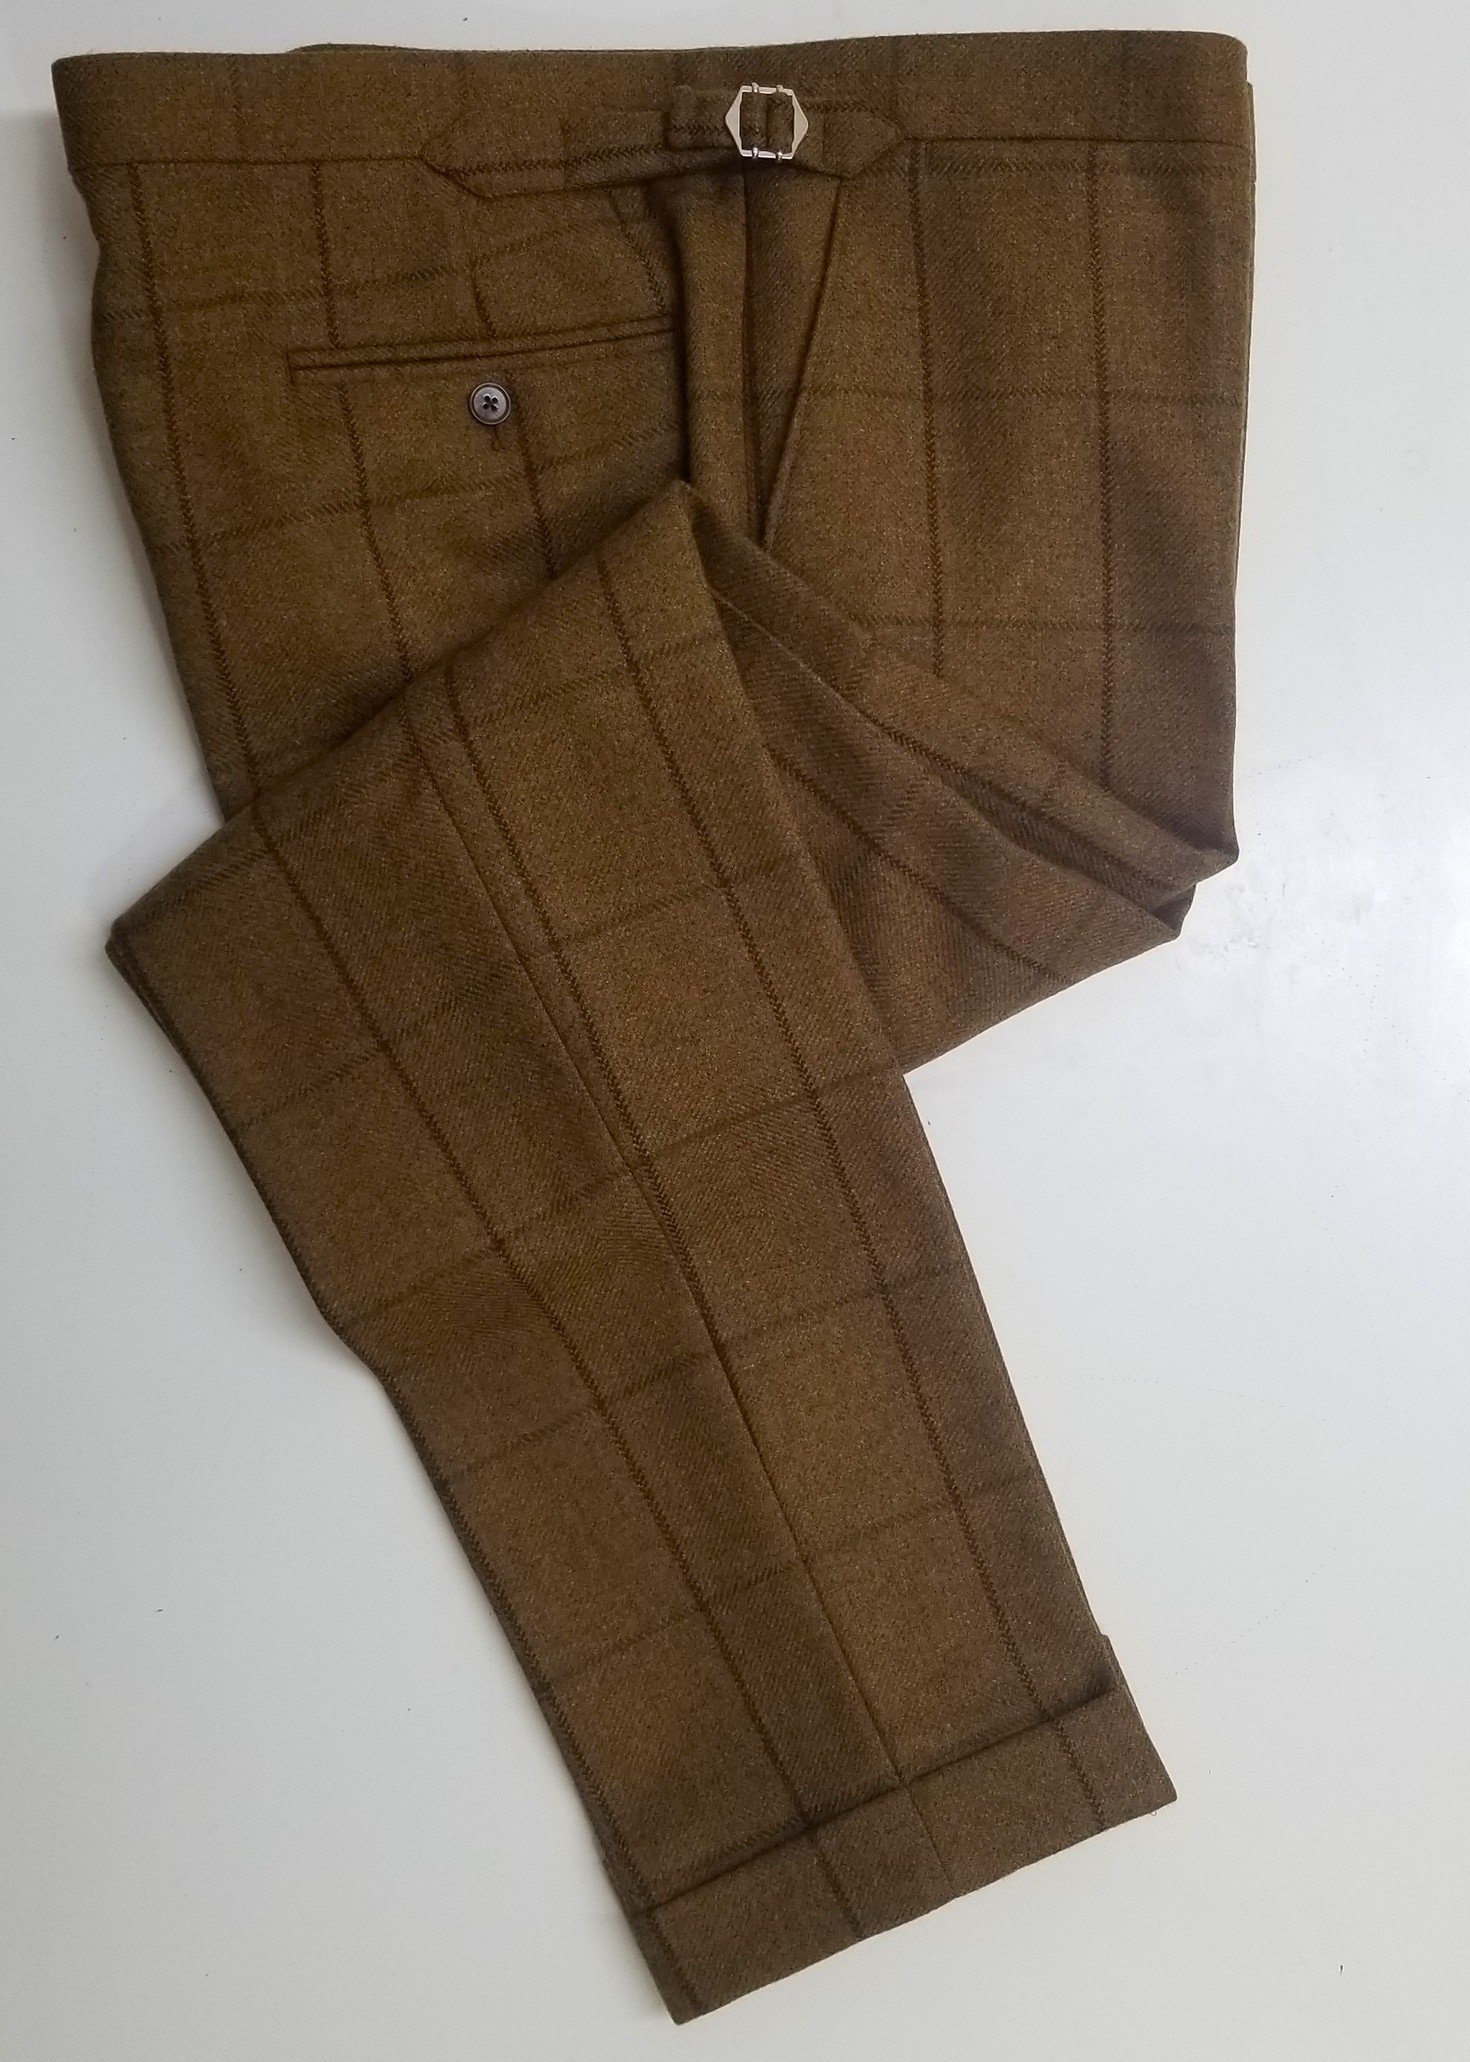 Brown check glenroyal 3 piece suit (15).jpg